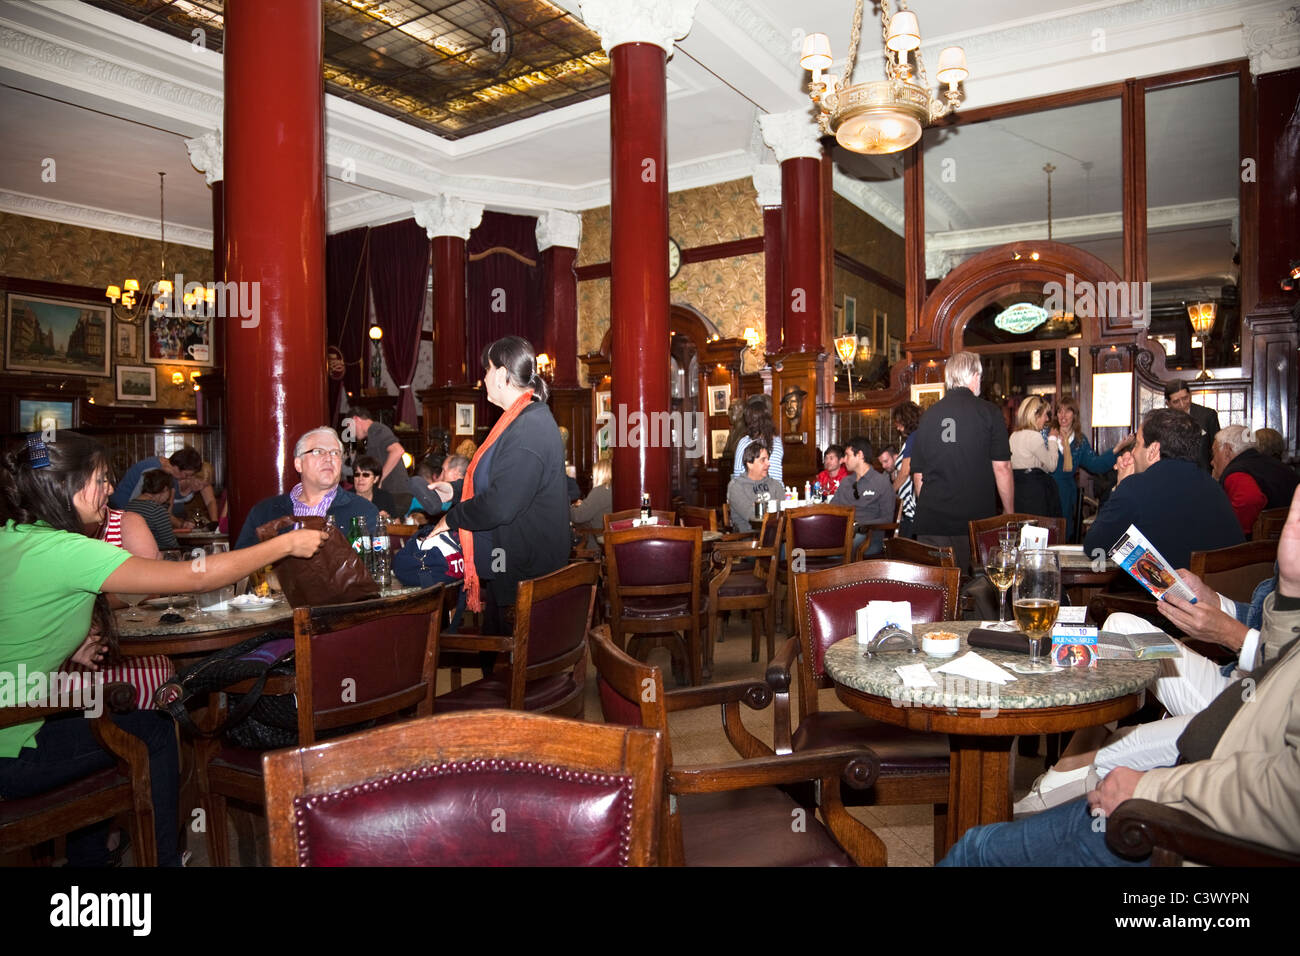 Im Inneren der berühmten Café Tortoni, Avenida de Mayo, Buenos Aires, Argentinien, Südamerika. Stockfoto